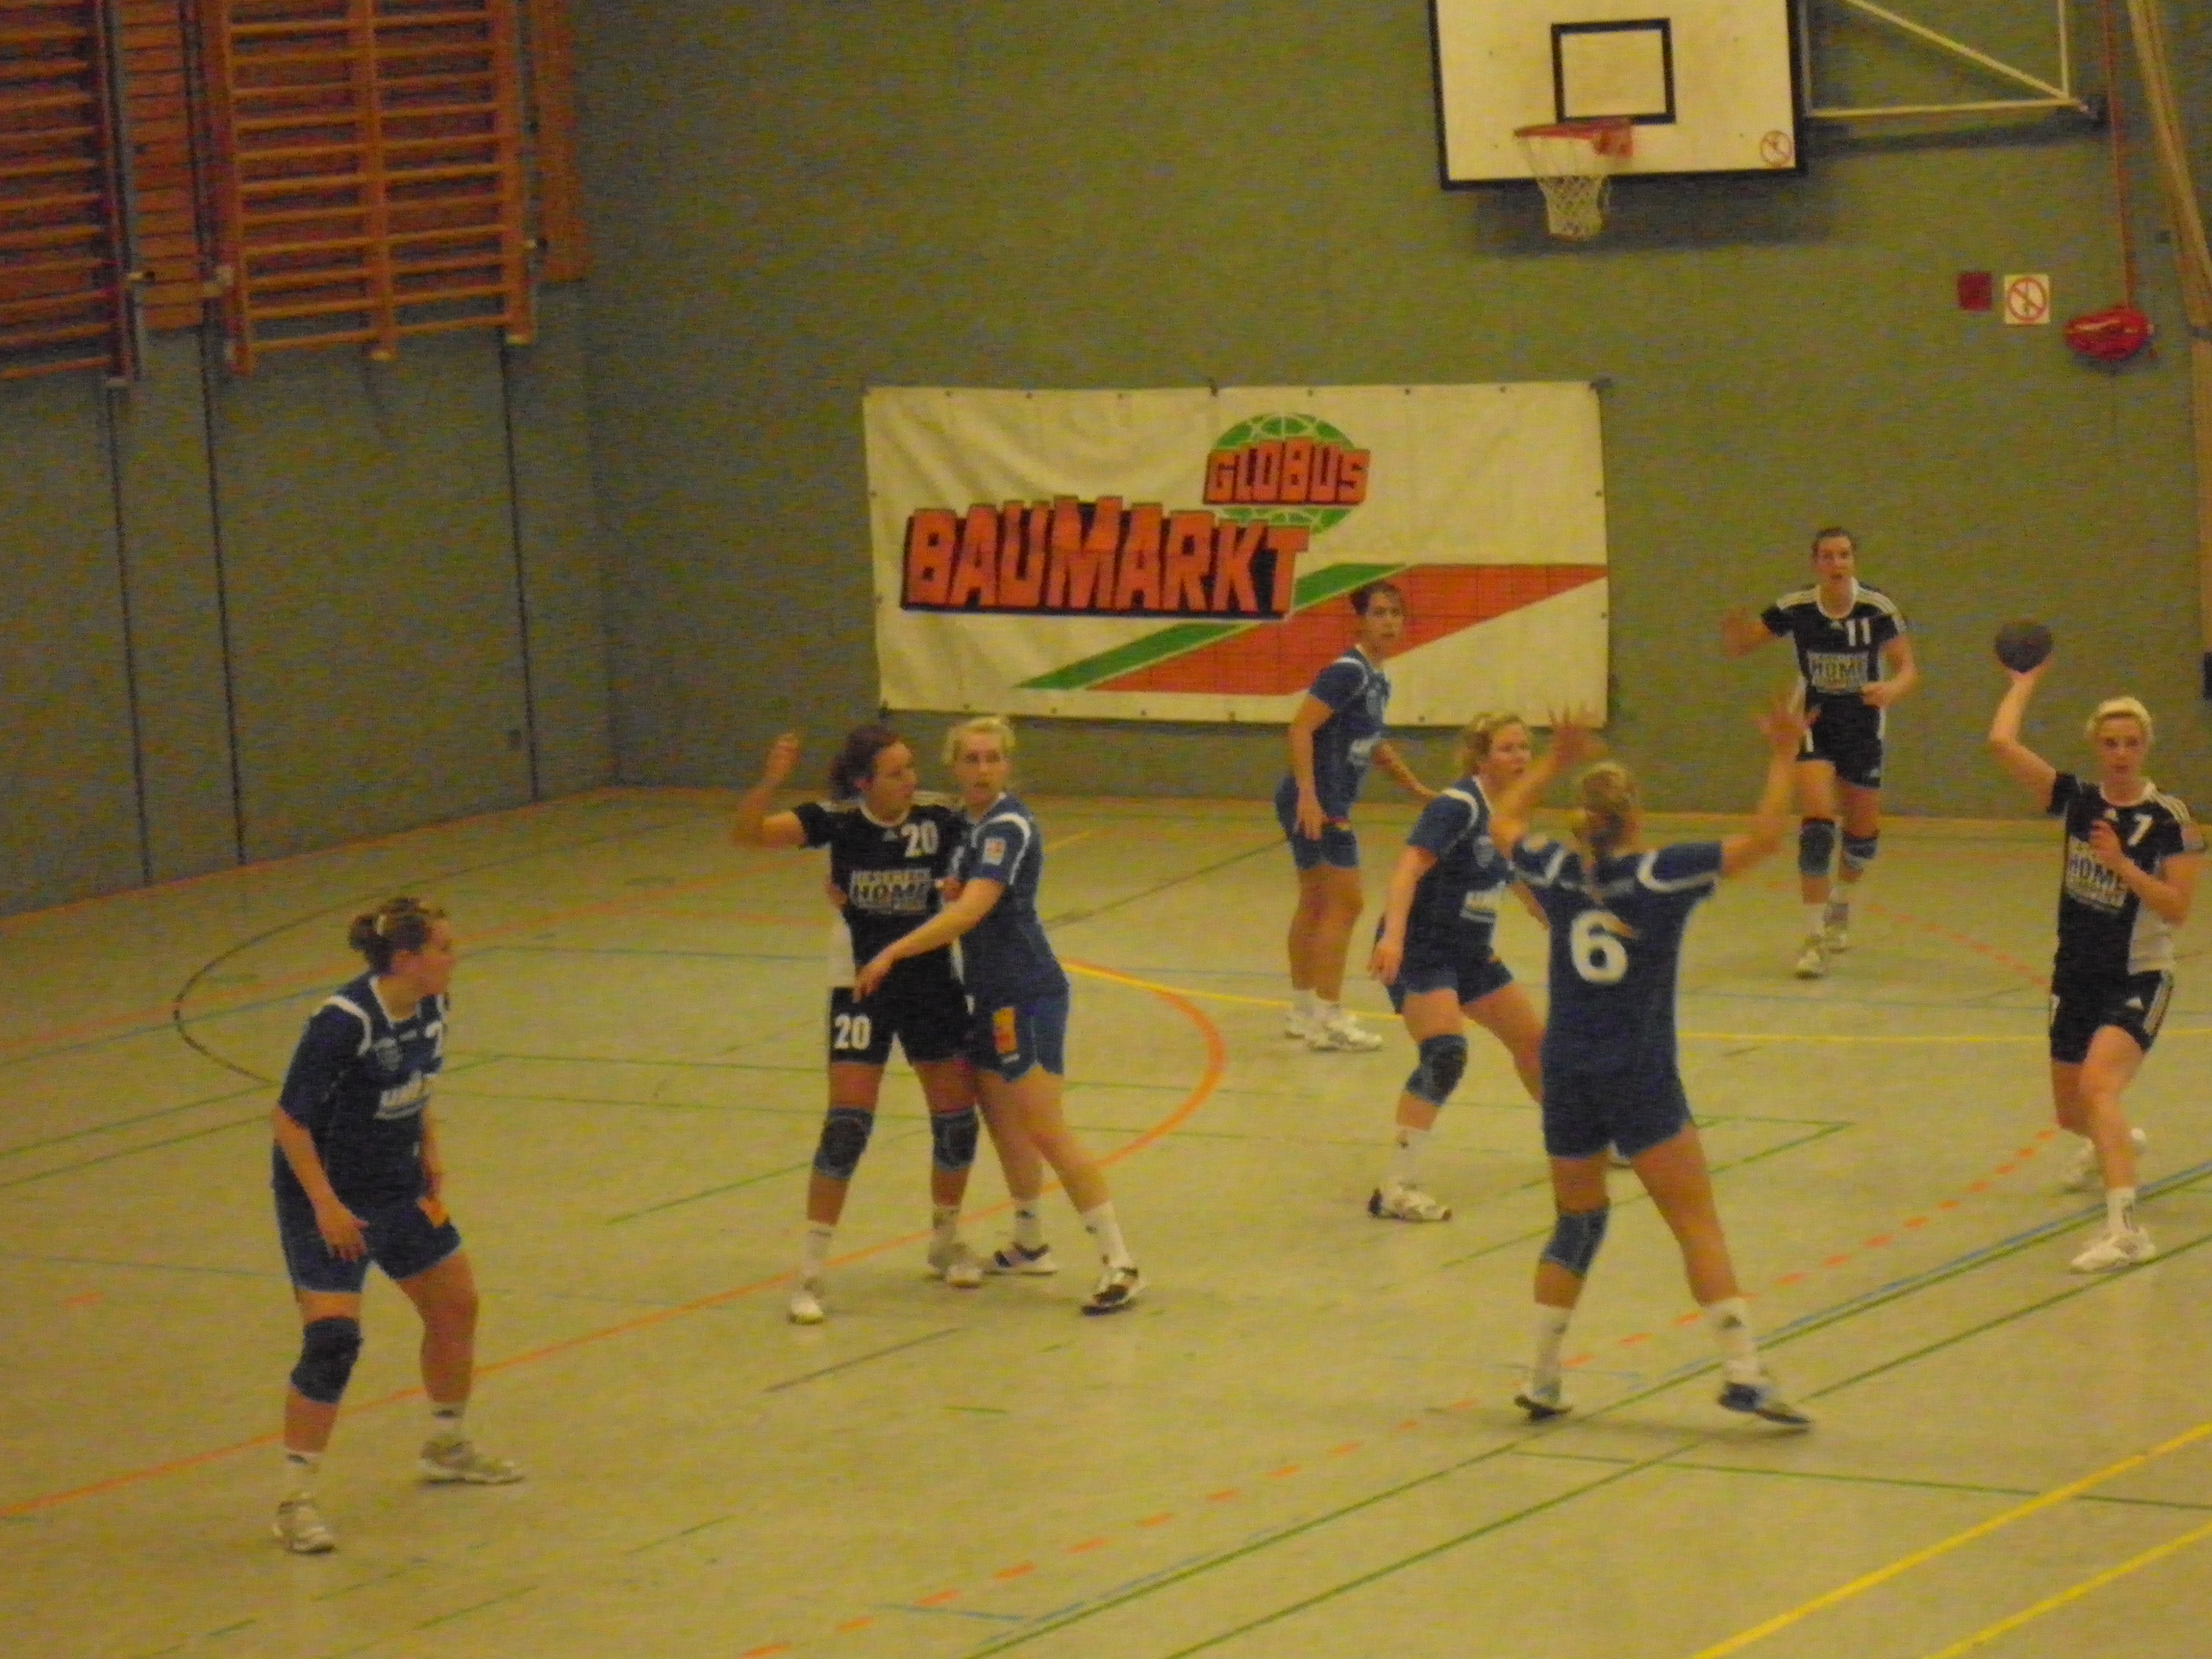 Rostocker HC (blue) last year